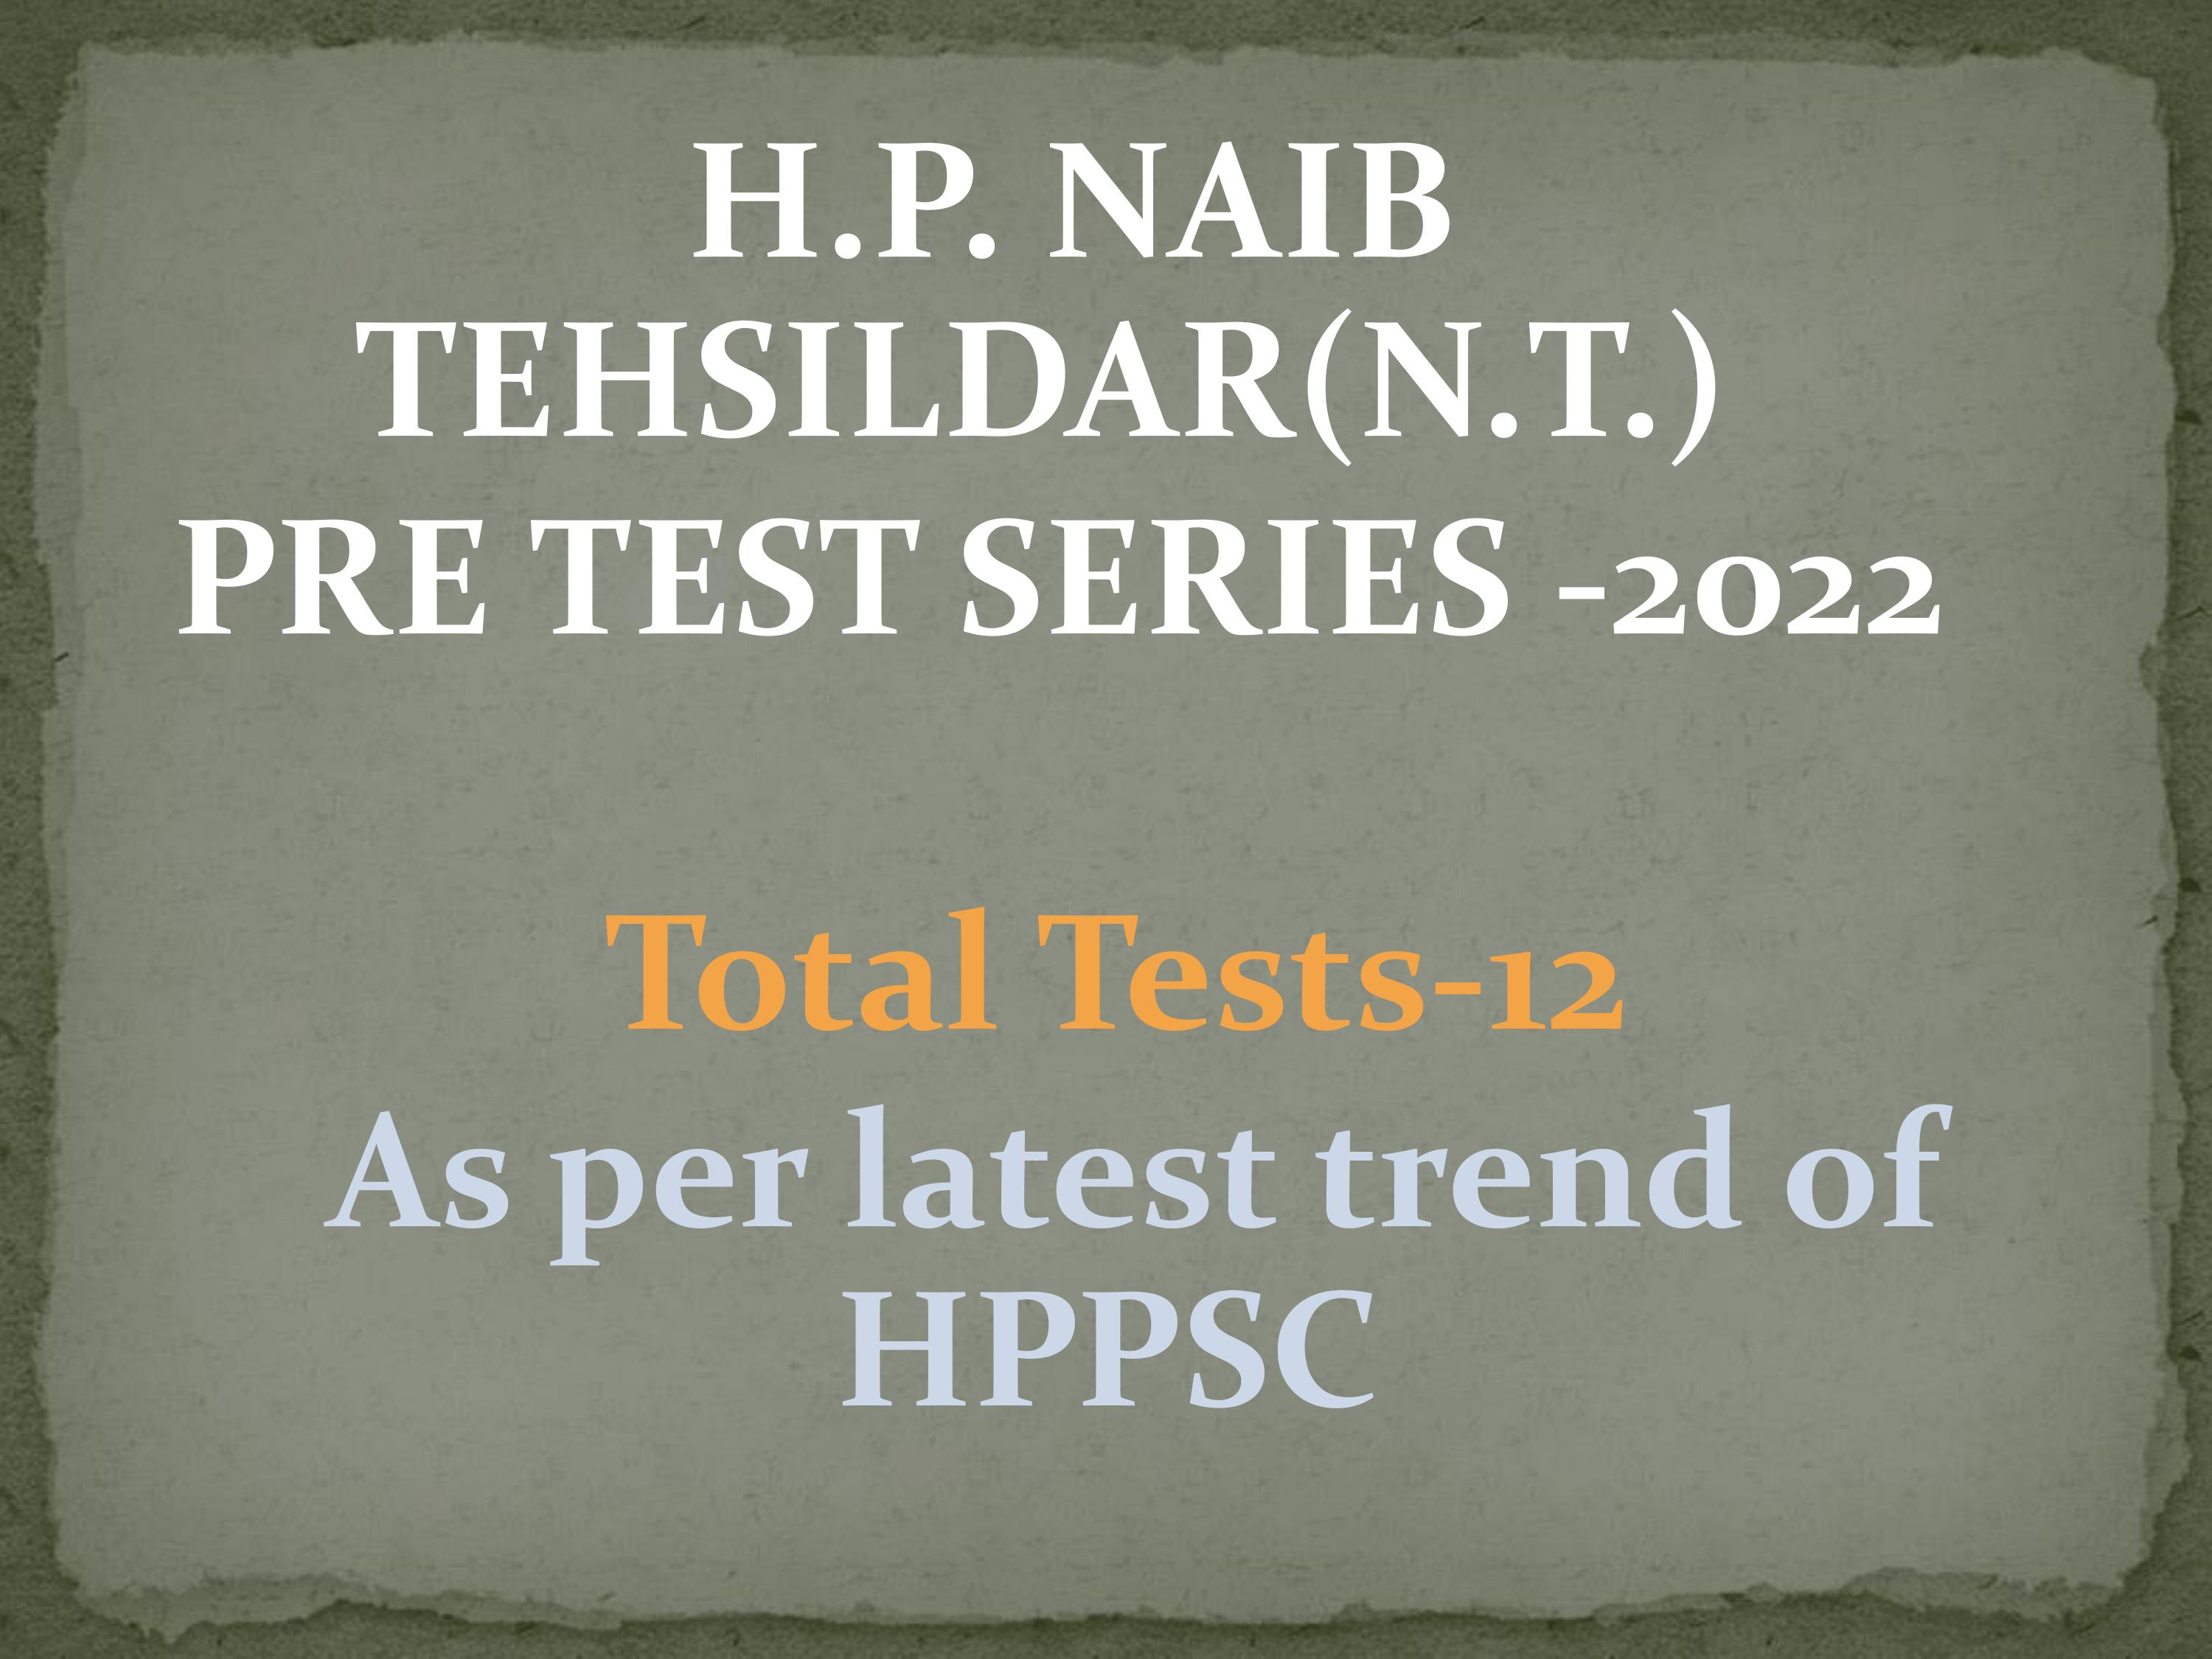 NAIB TEHSILDAR (NT) PRE -2022 TEST SERIES